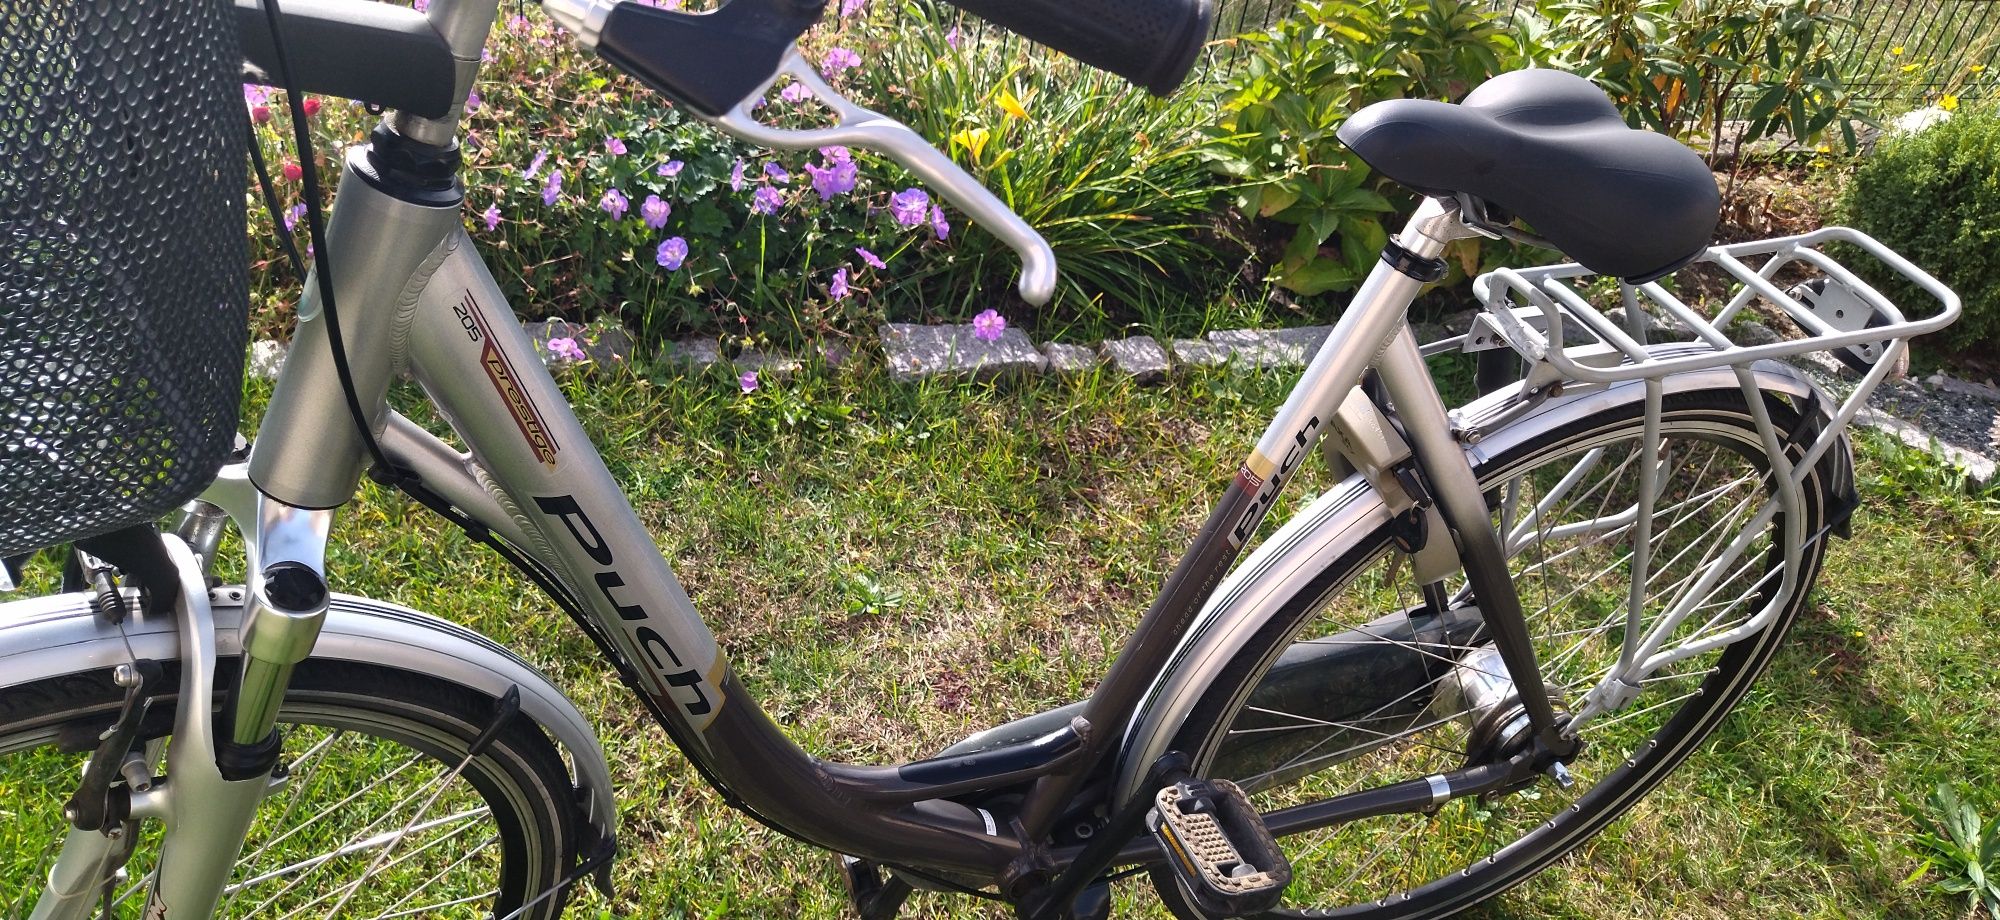 Rower Puch Nexus 7 (jak Gazelle)Piękny